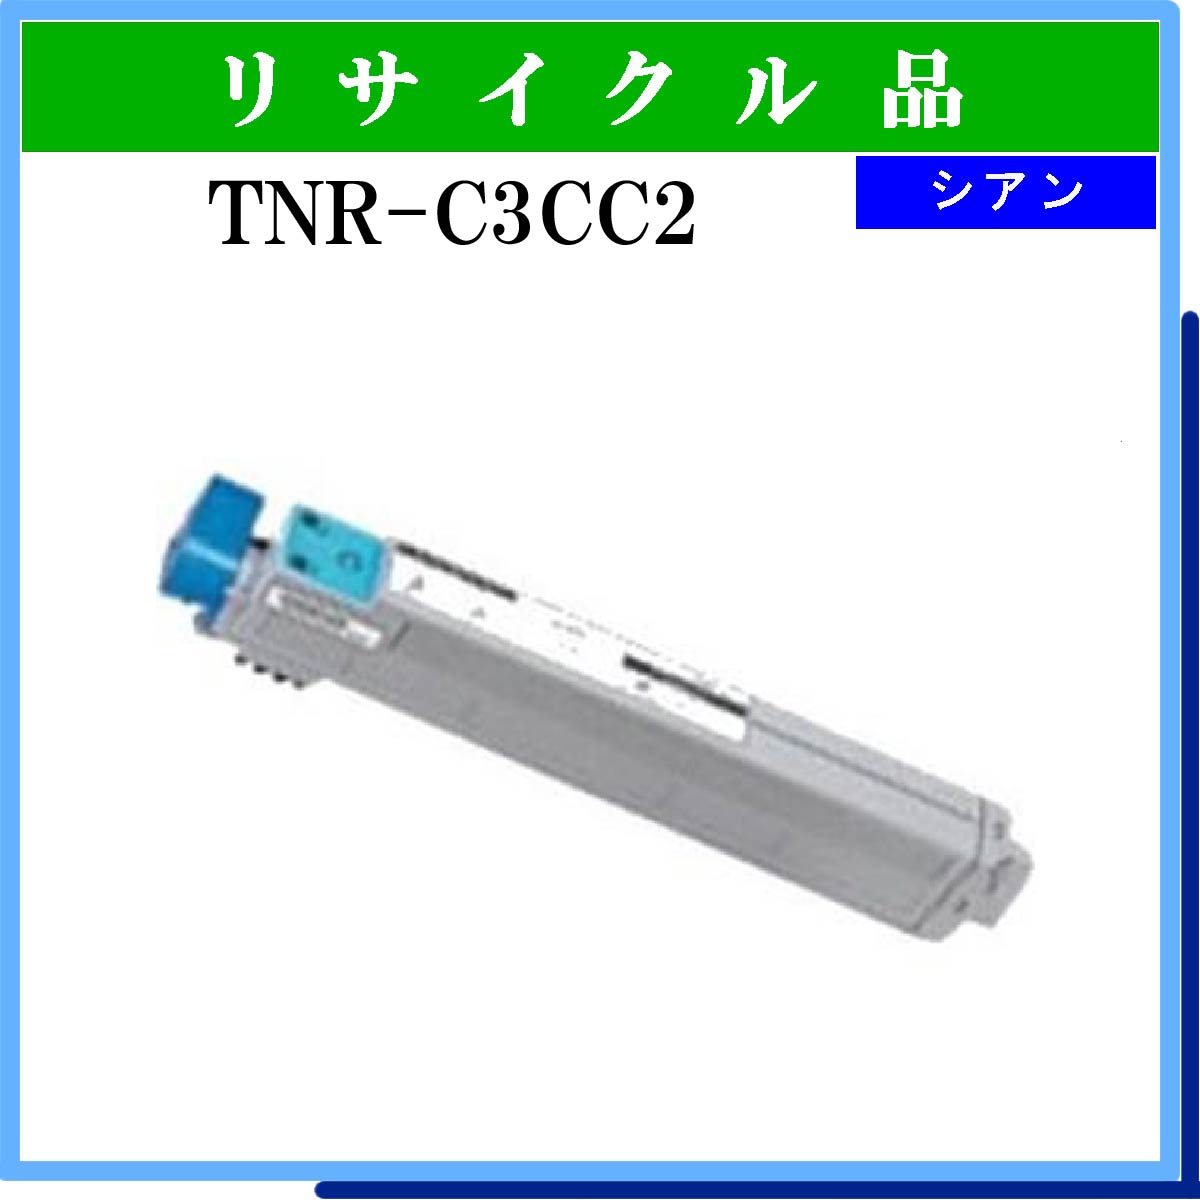 TNR-C3CC2 - ウインドウを閉じる